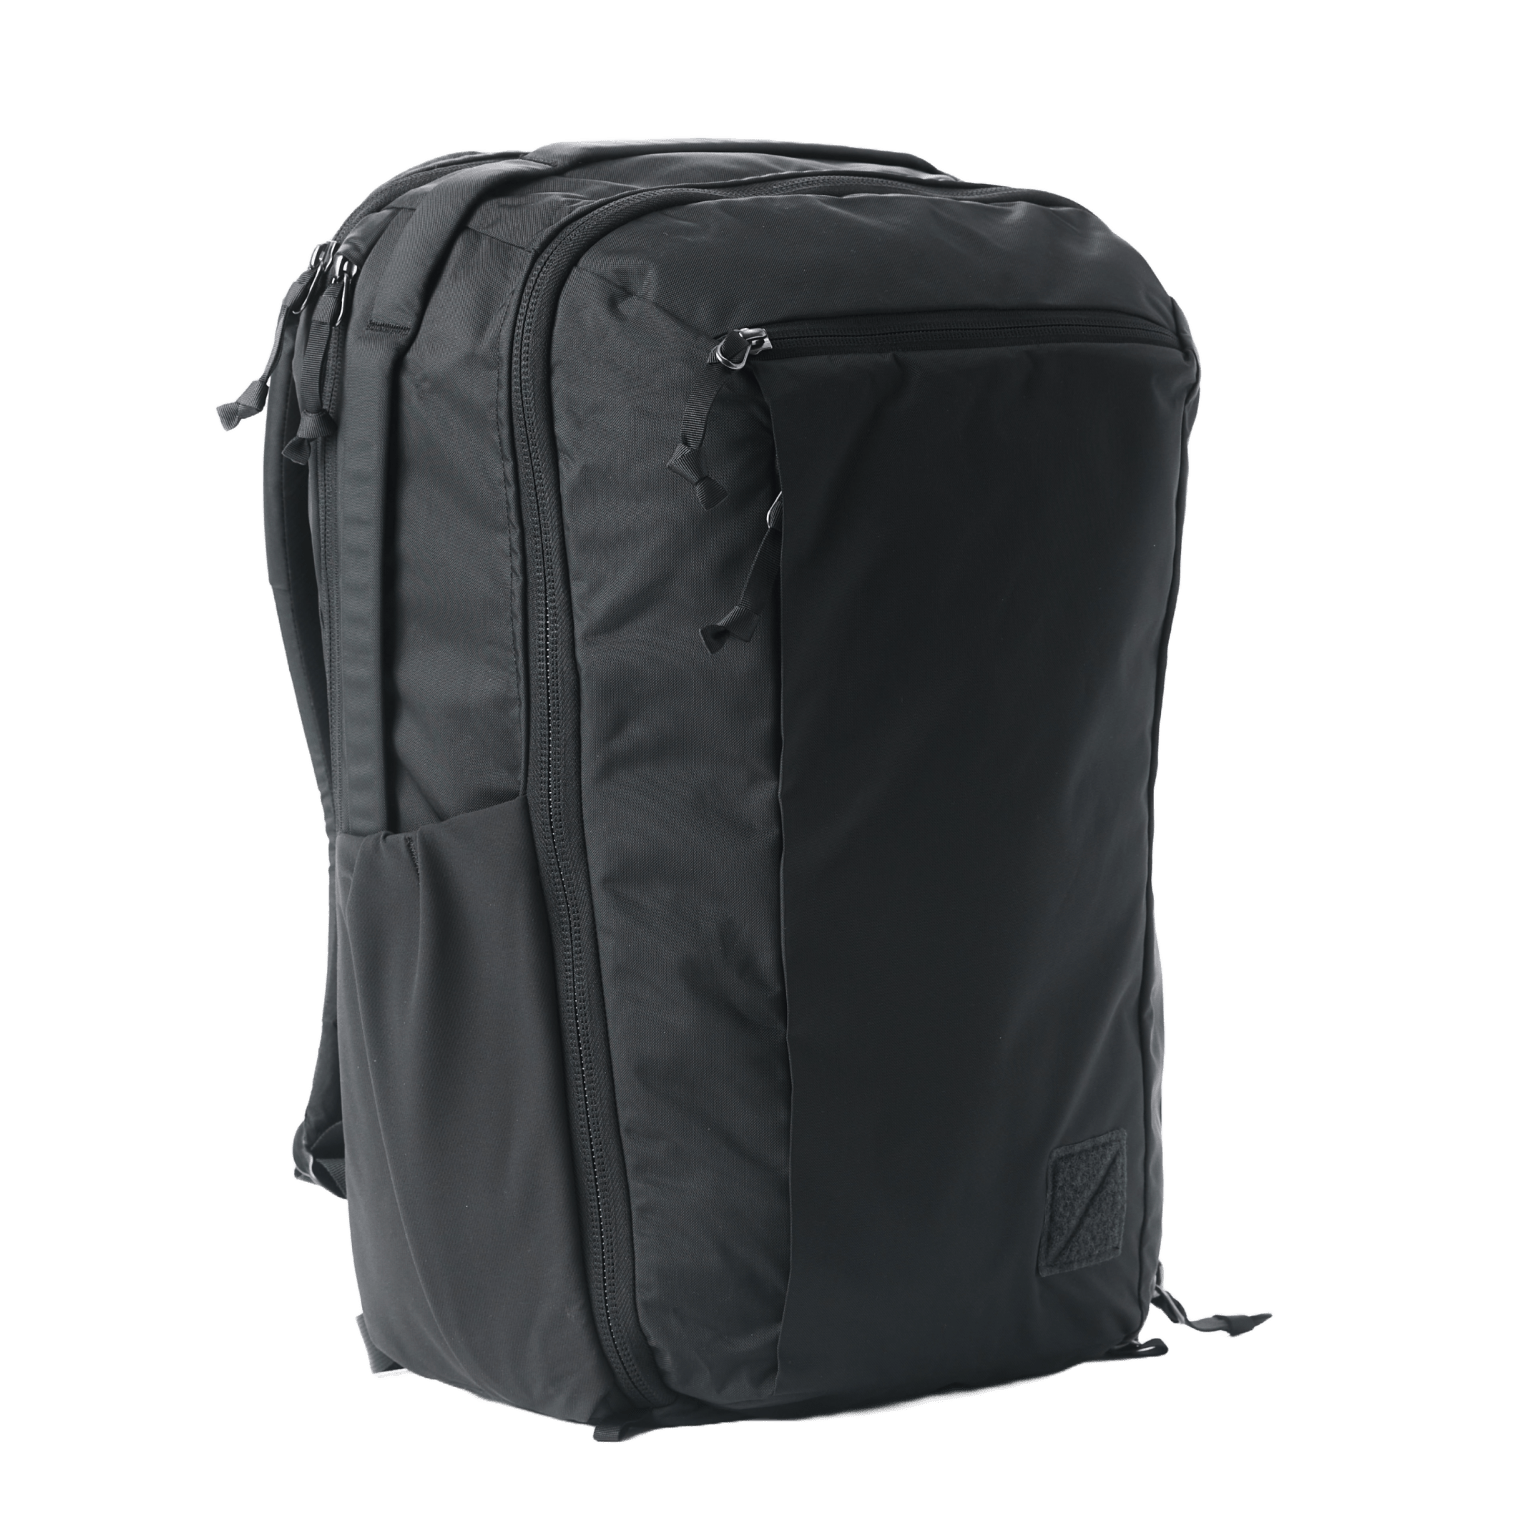 CIVIC Travel Bag 26L CTB26 - solution dyed black - front